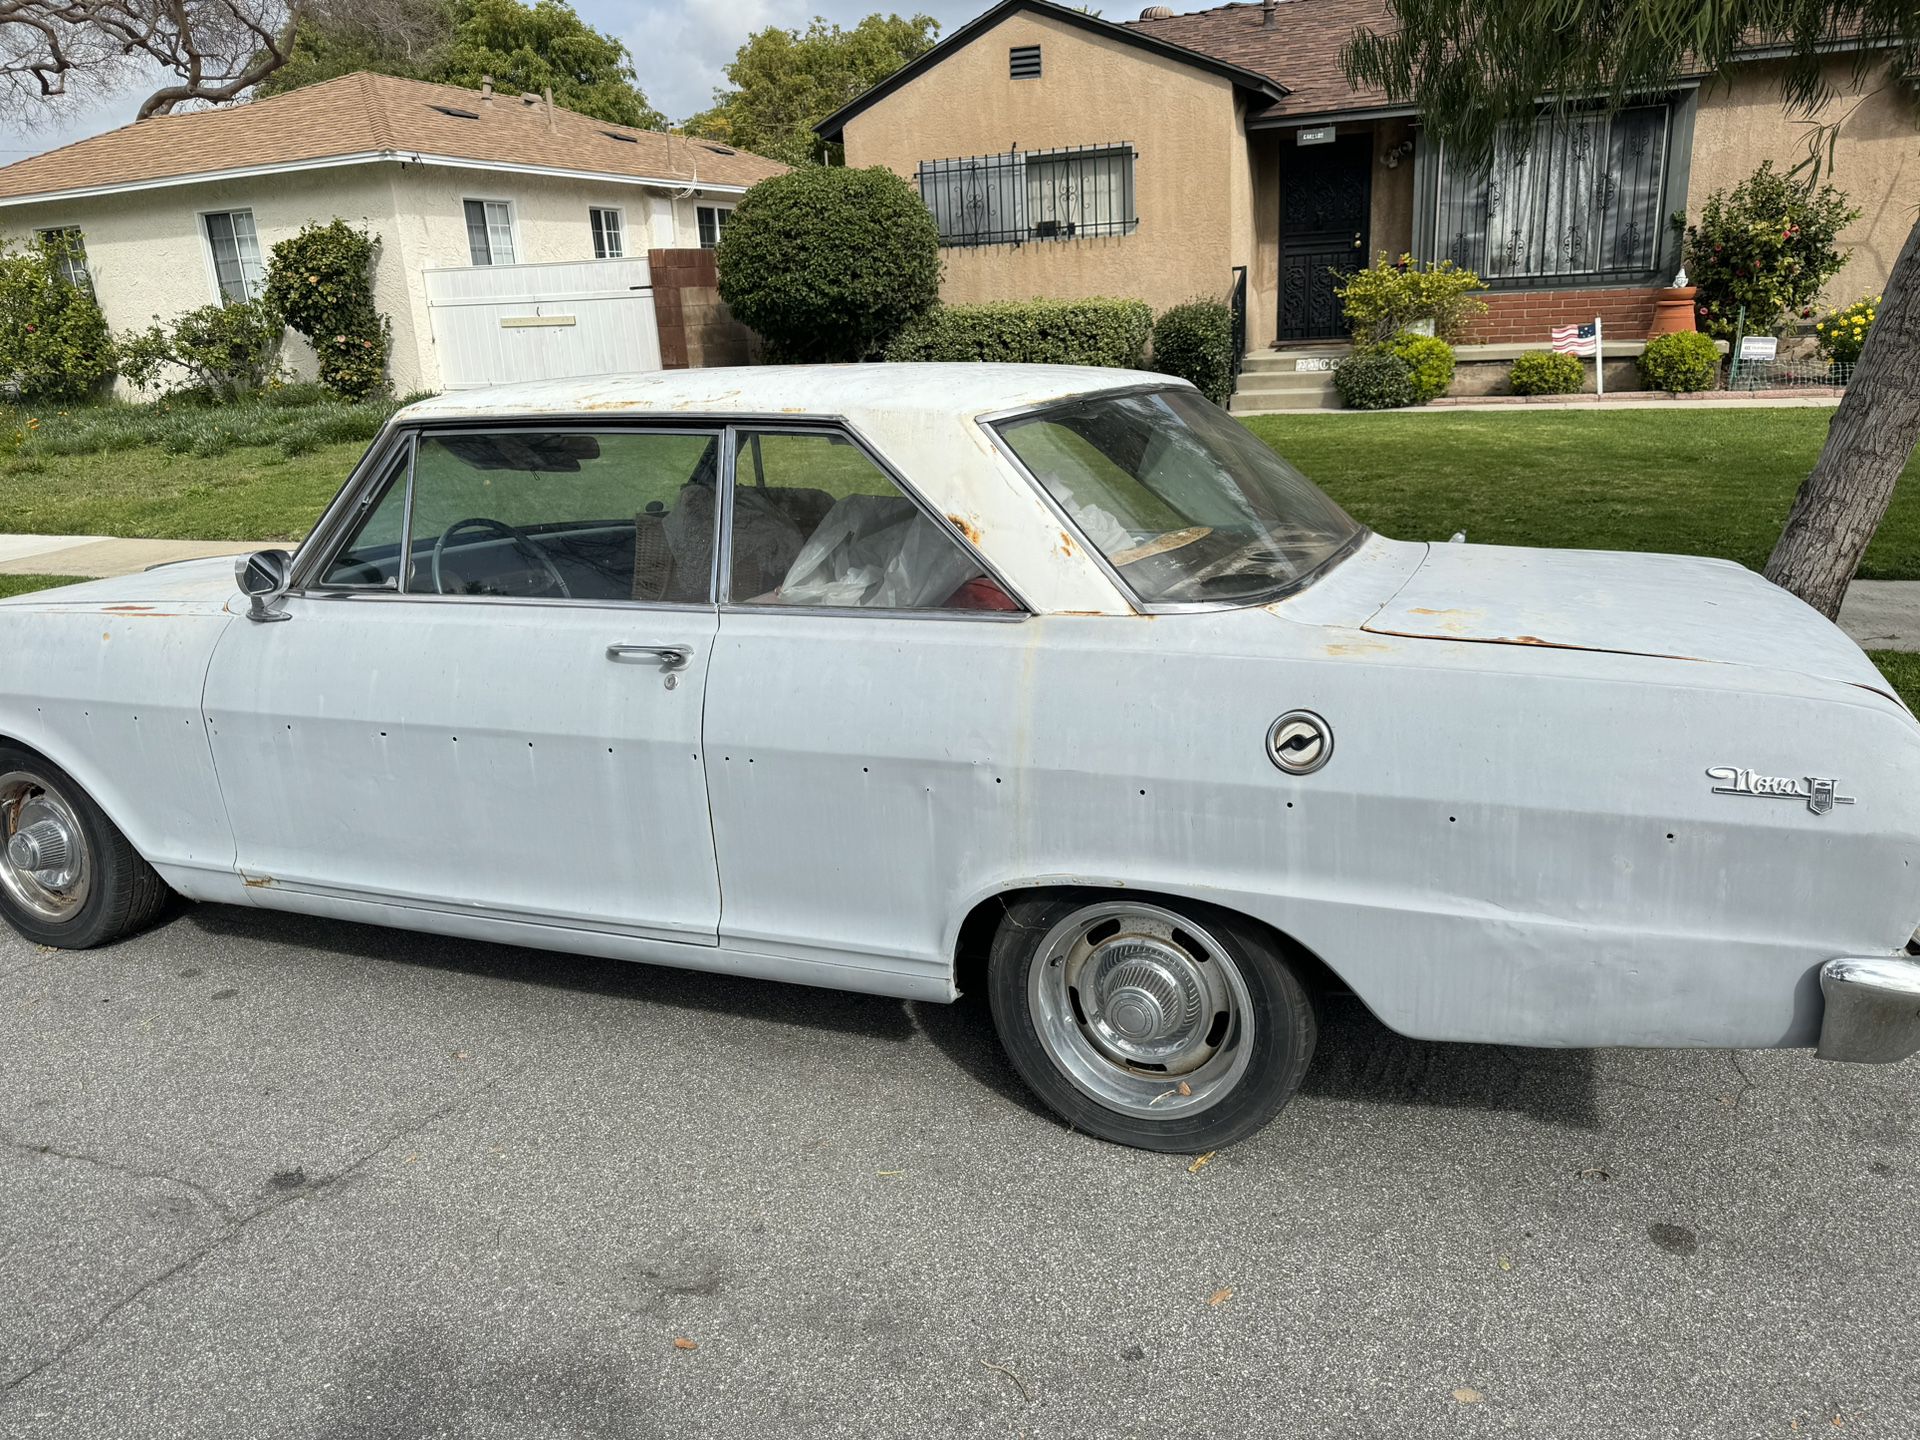 1963 Chevy nova $8500